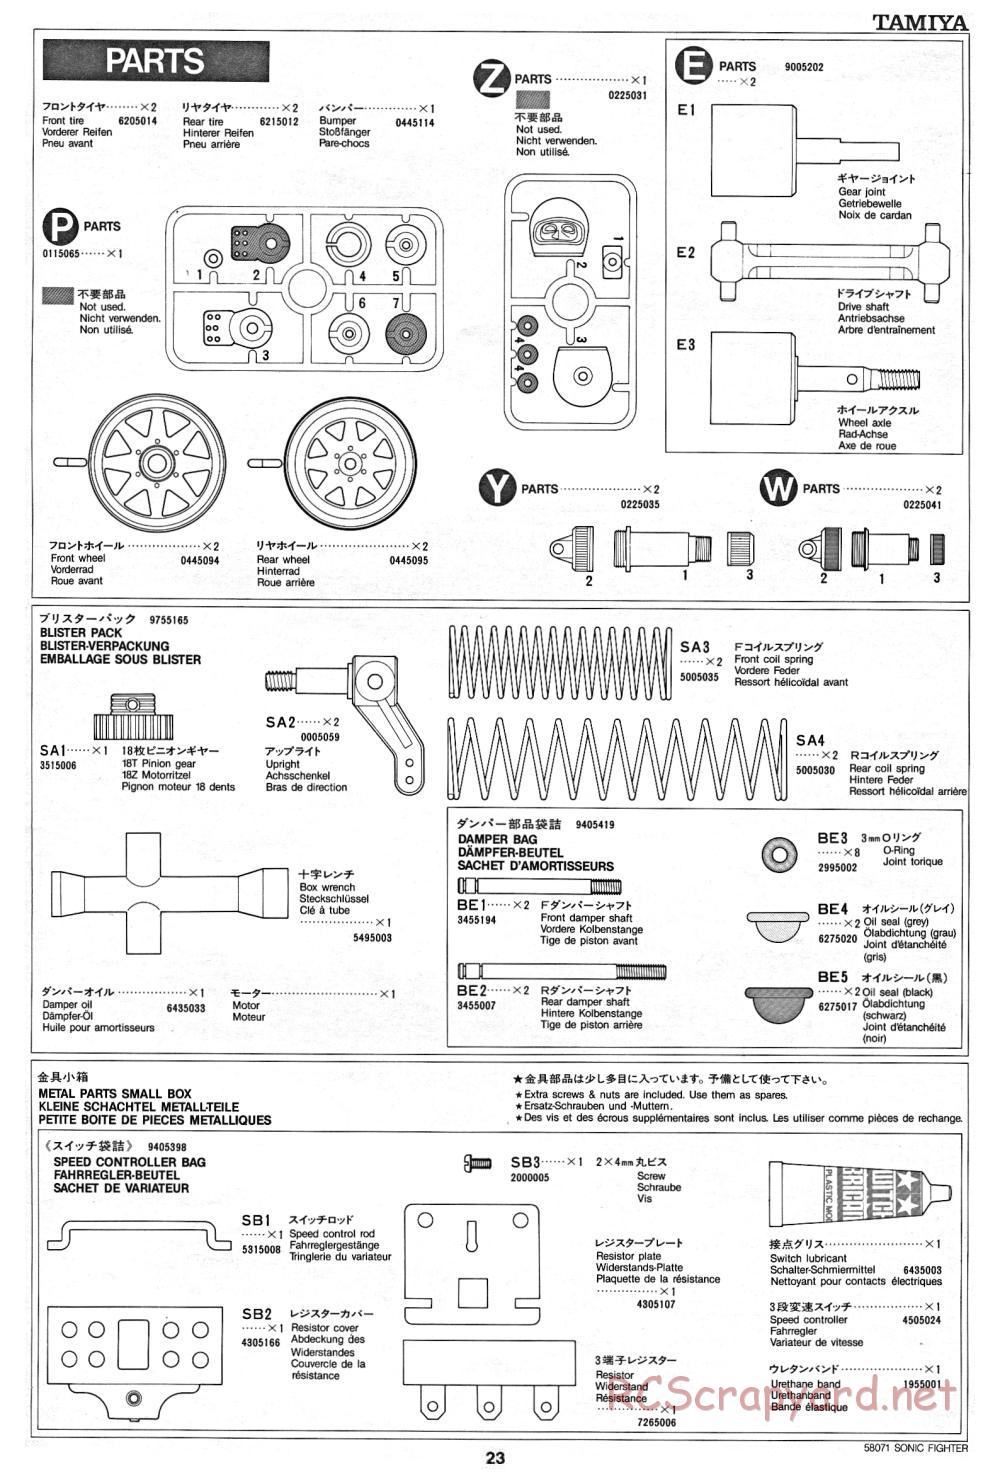 Tamiya - Sonic Fighter - 58071 - Manual - Page 23